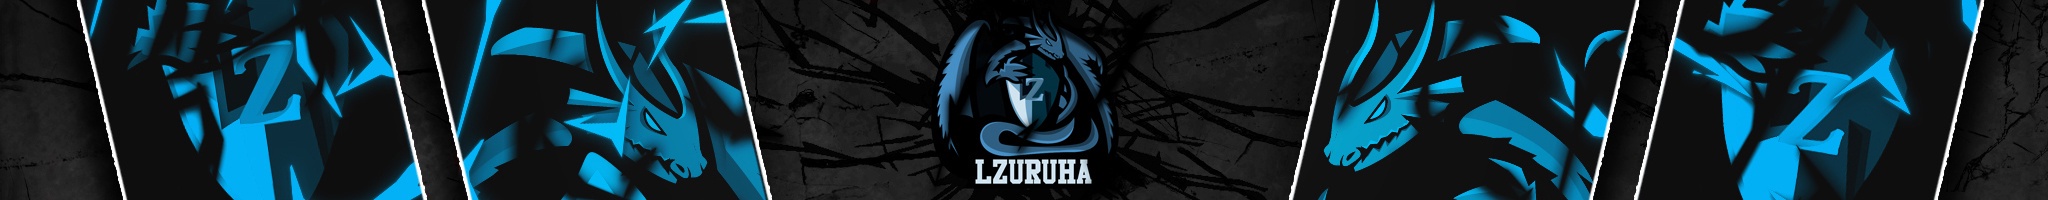 Lzuruha Banner